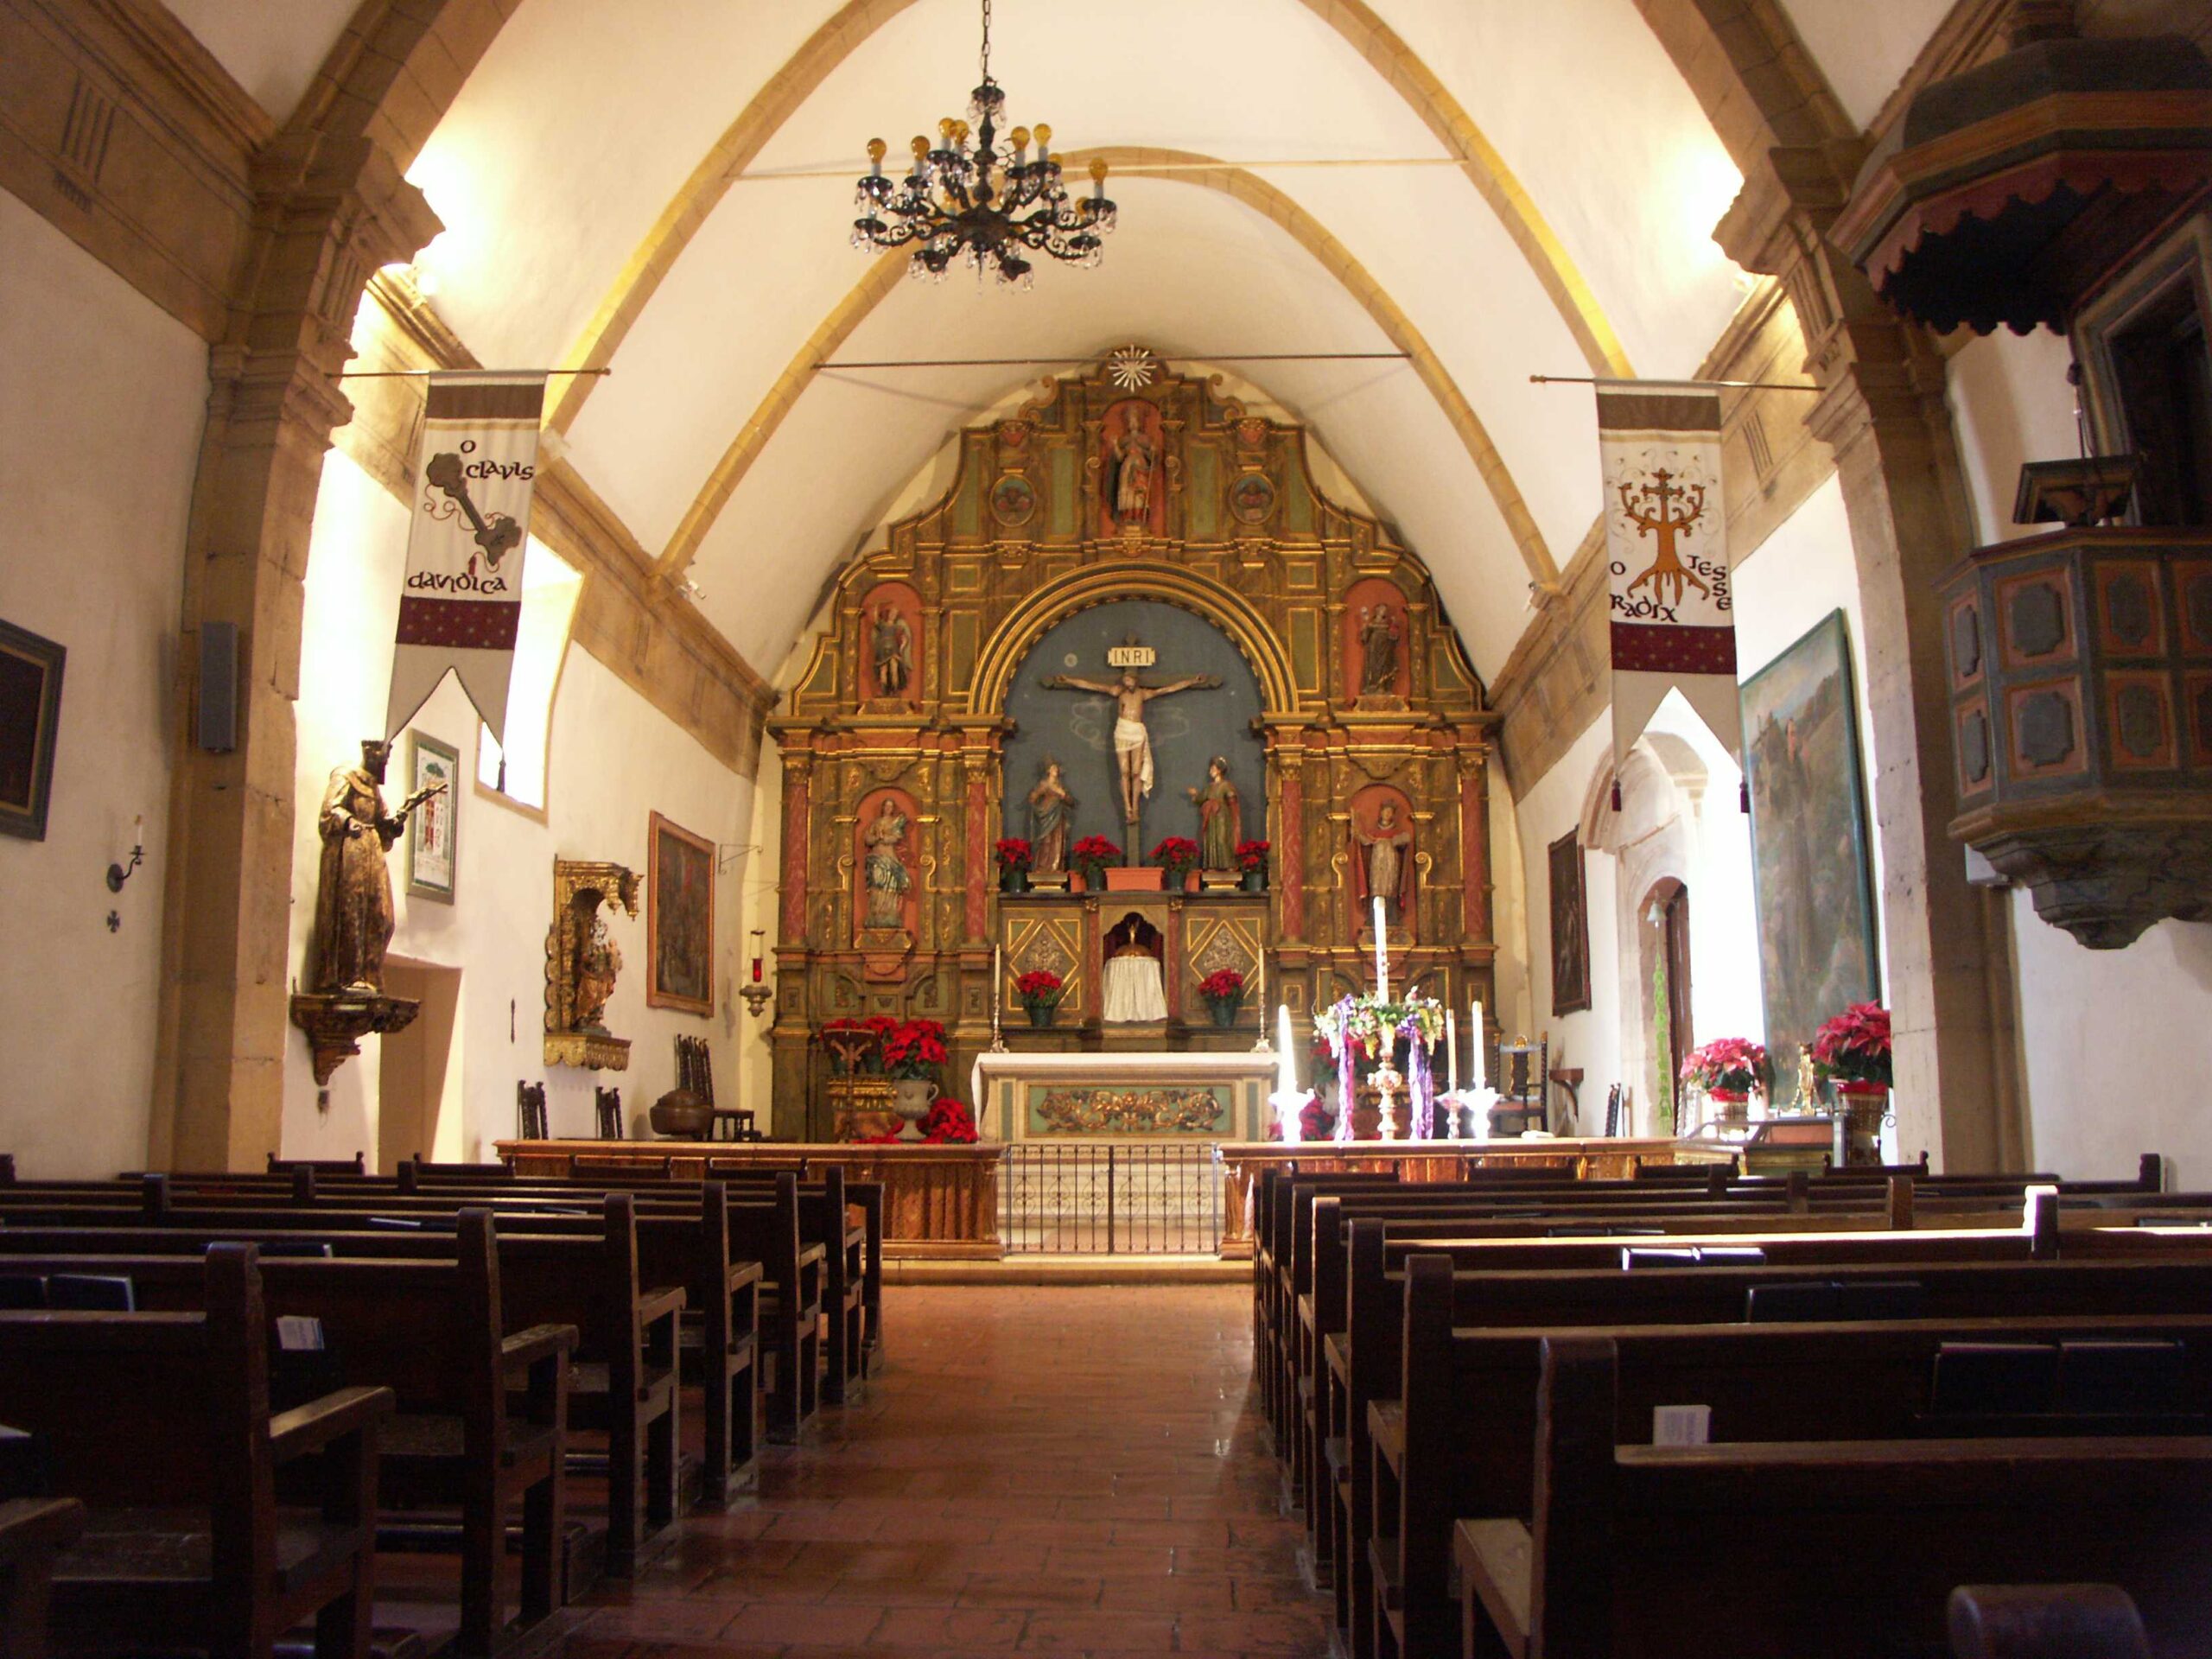 Carmel Mission Altar